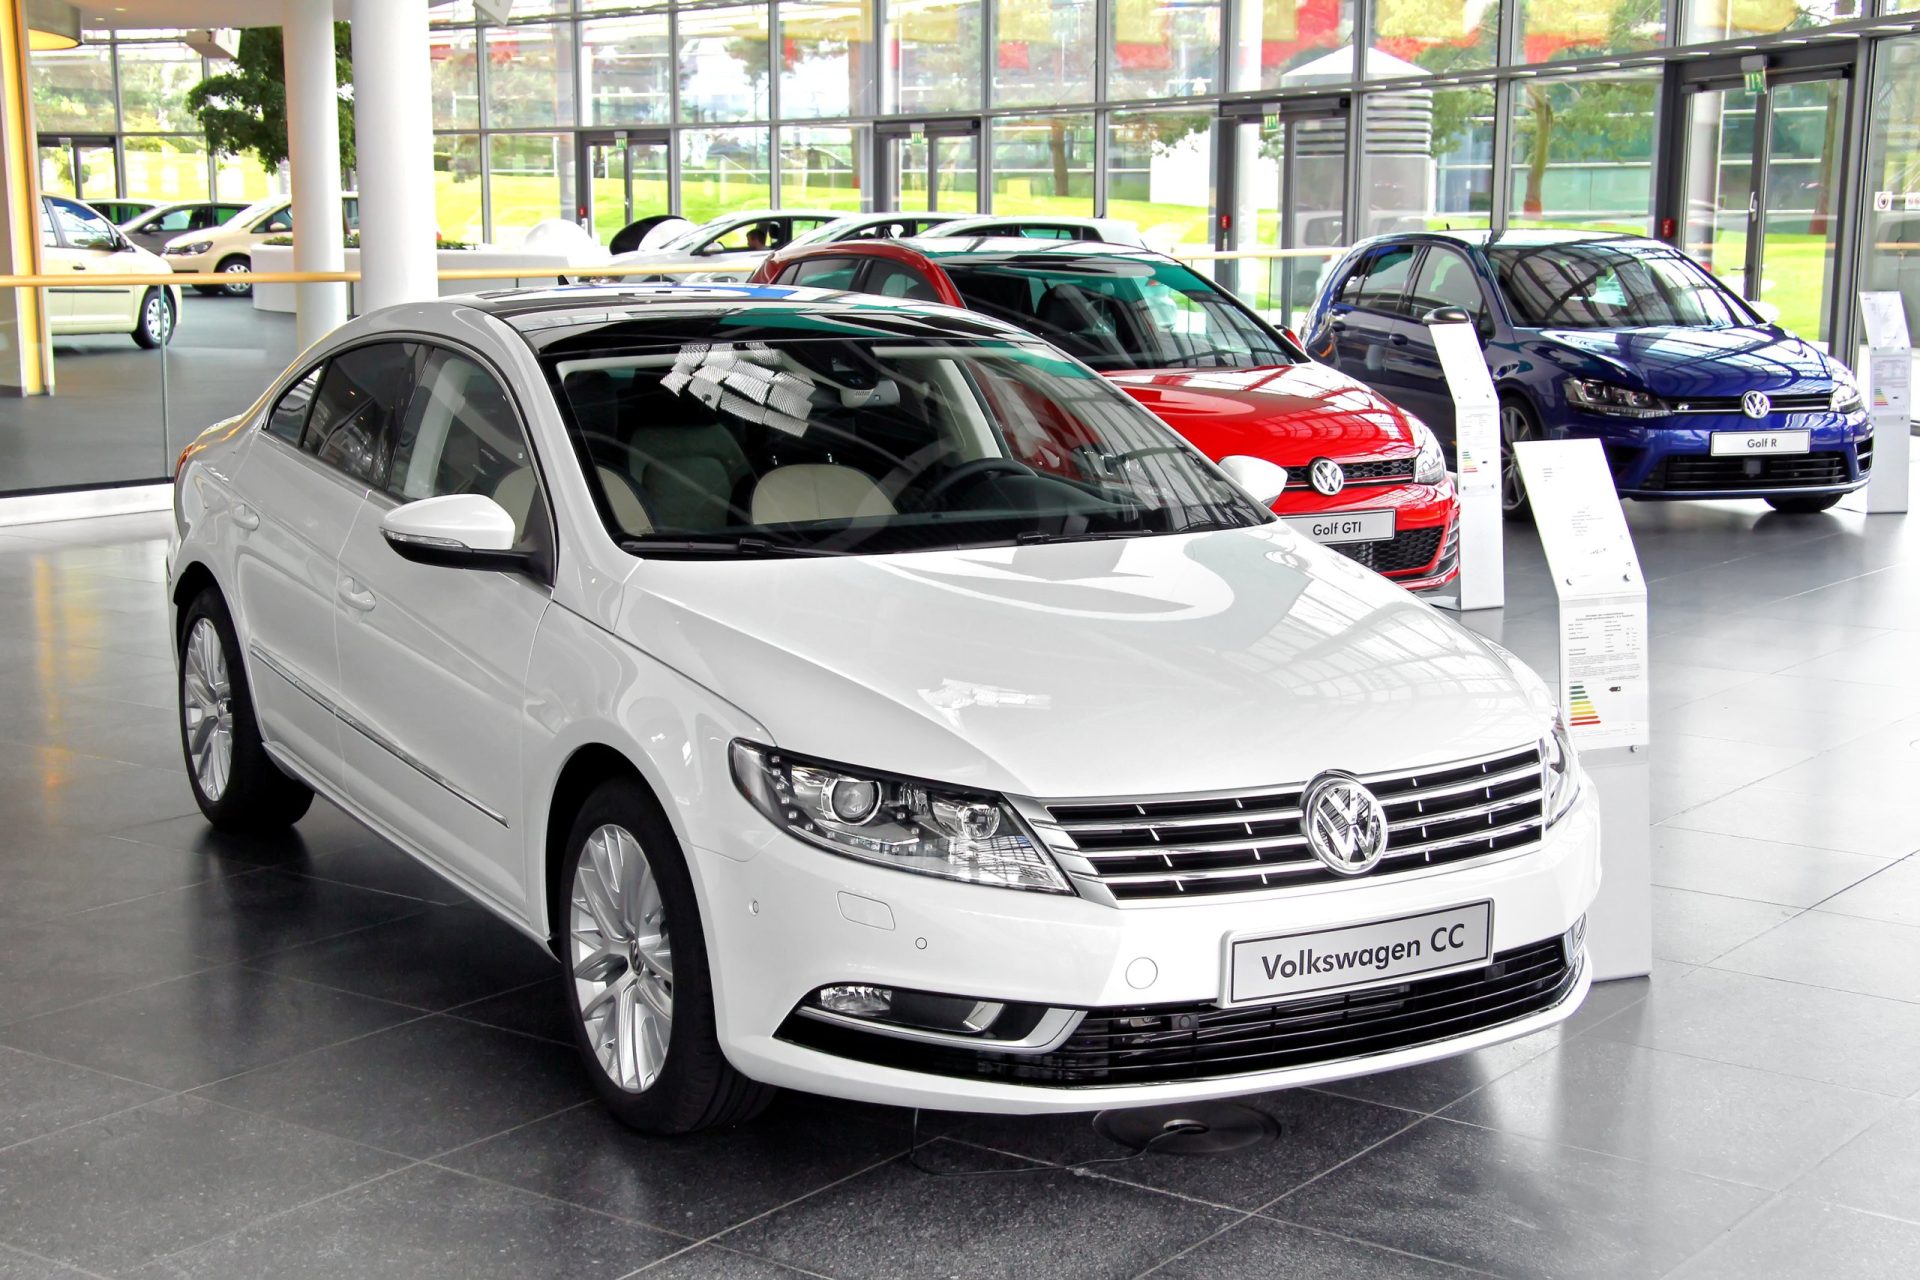 2014 Volkswagen Passat CC on display at a car showroom